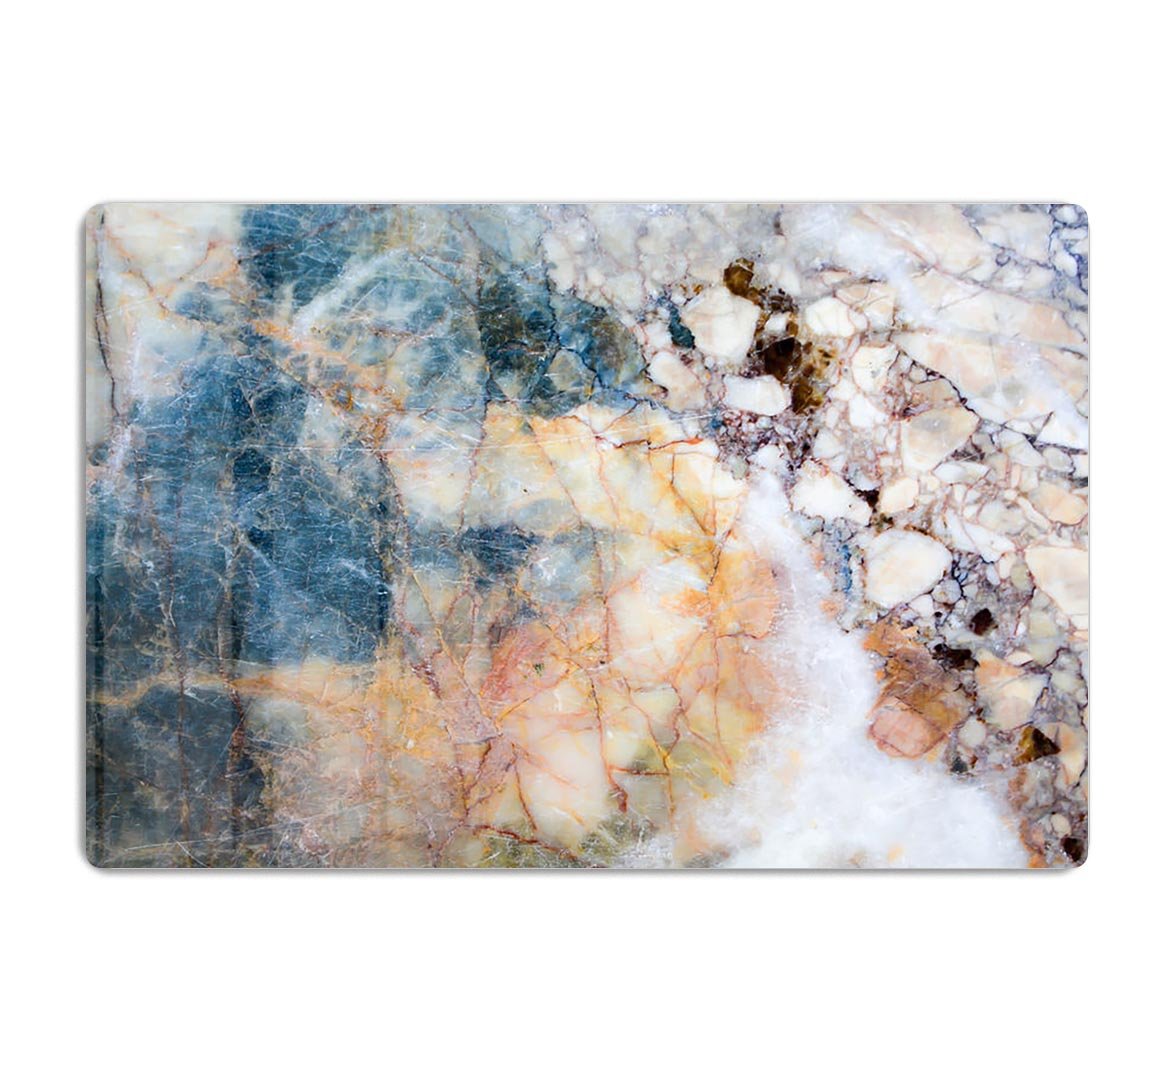 Marble patterned texture HD Metal Print - Canvas Art Rocks - 1